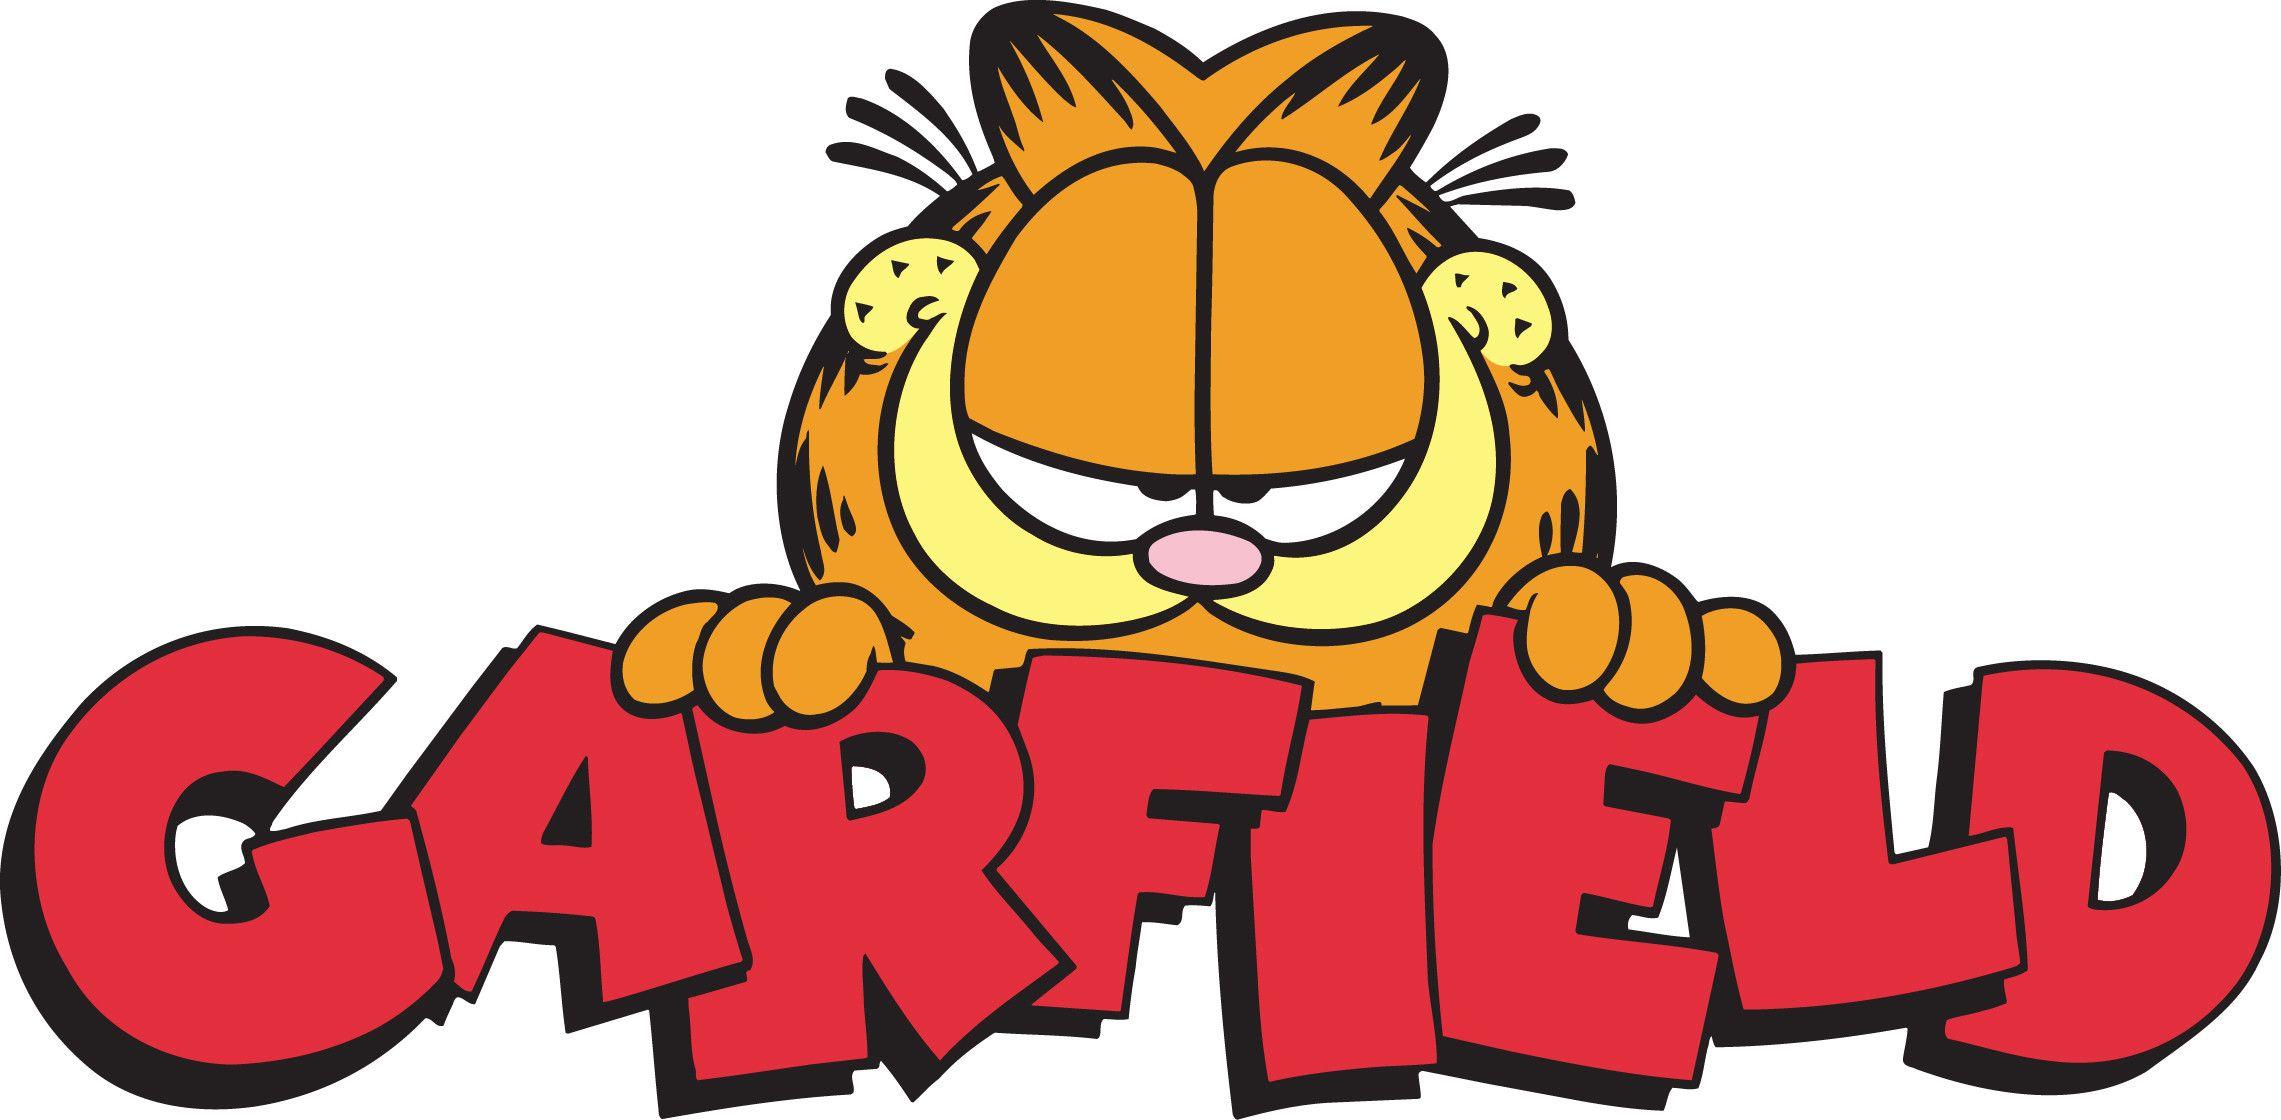 Garfield The Cat Wallpapers - Wallpaper Cave